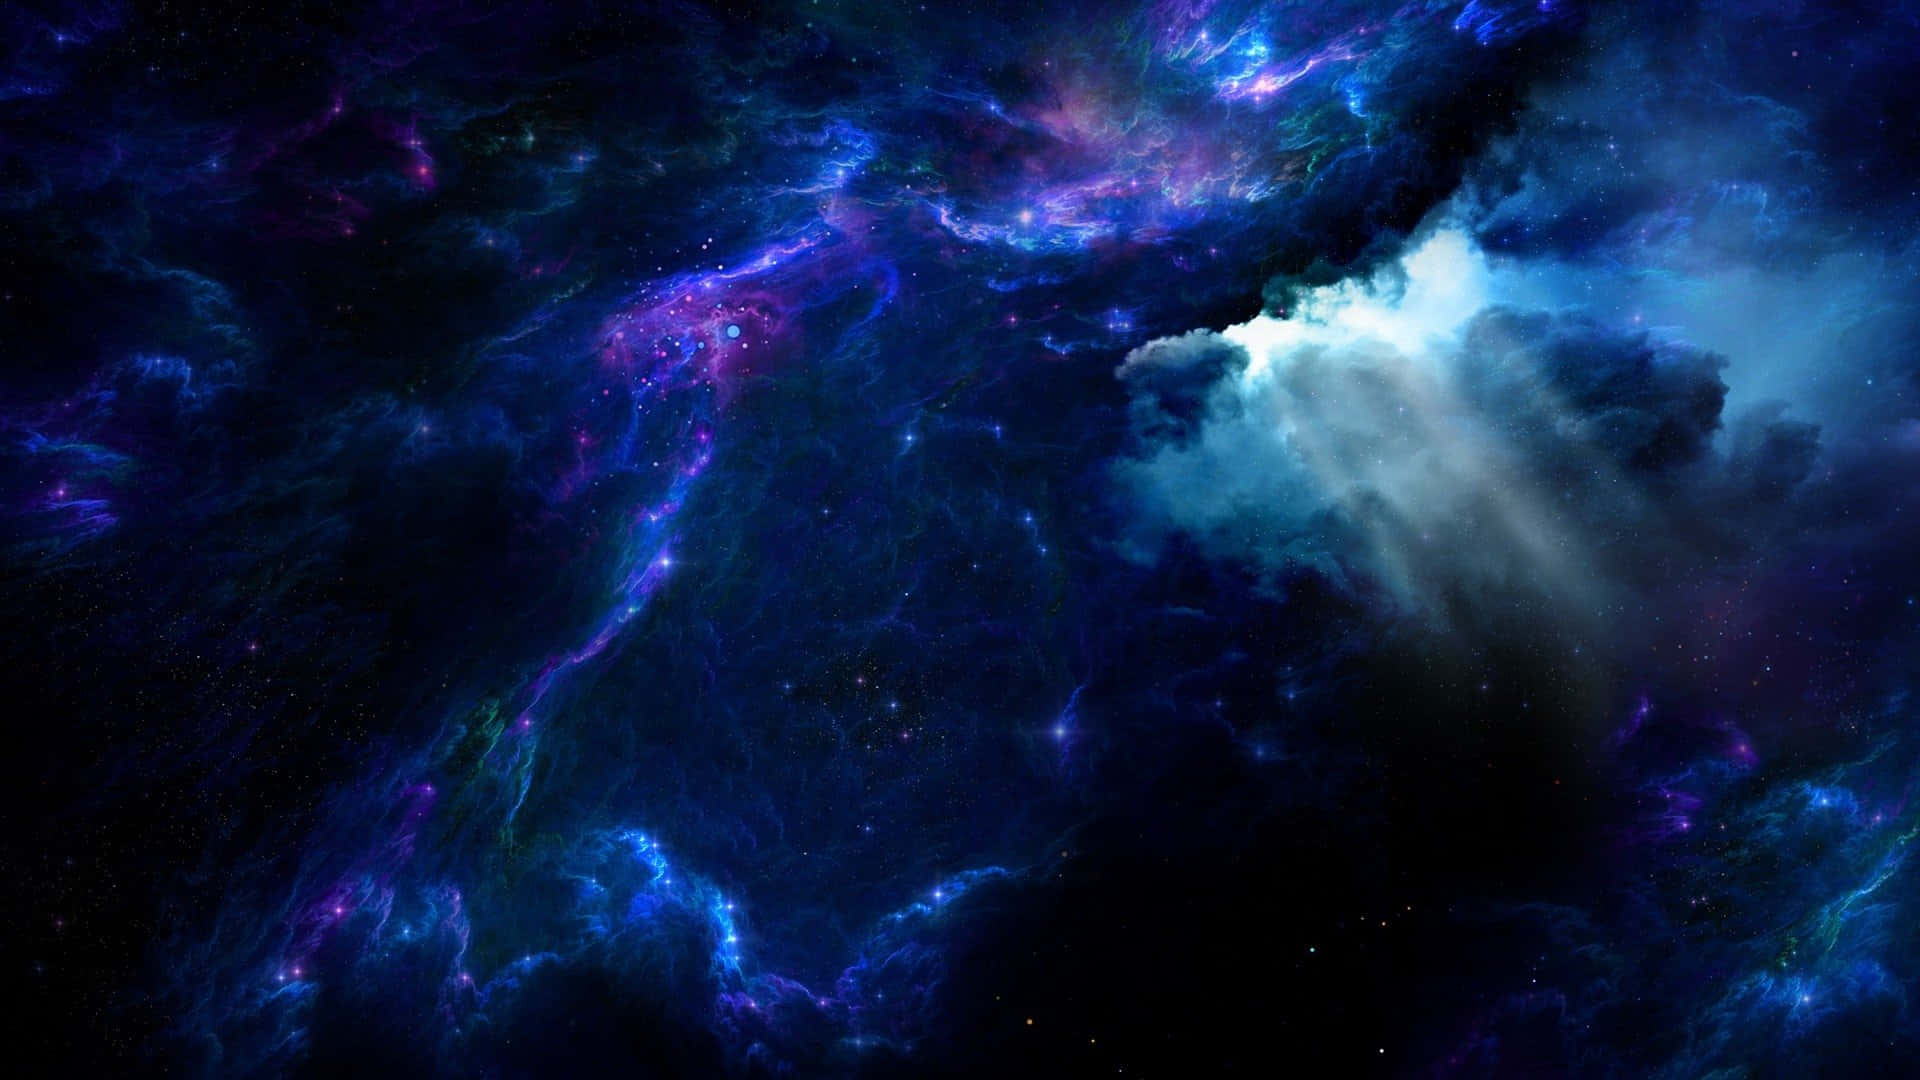 Mesmerizing Galaxy Artwork in Deep Space Wallpaper